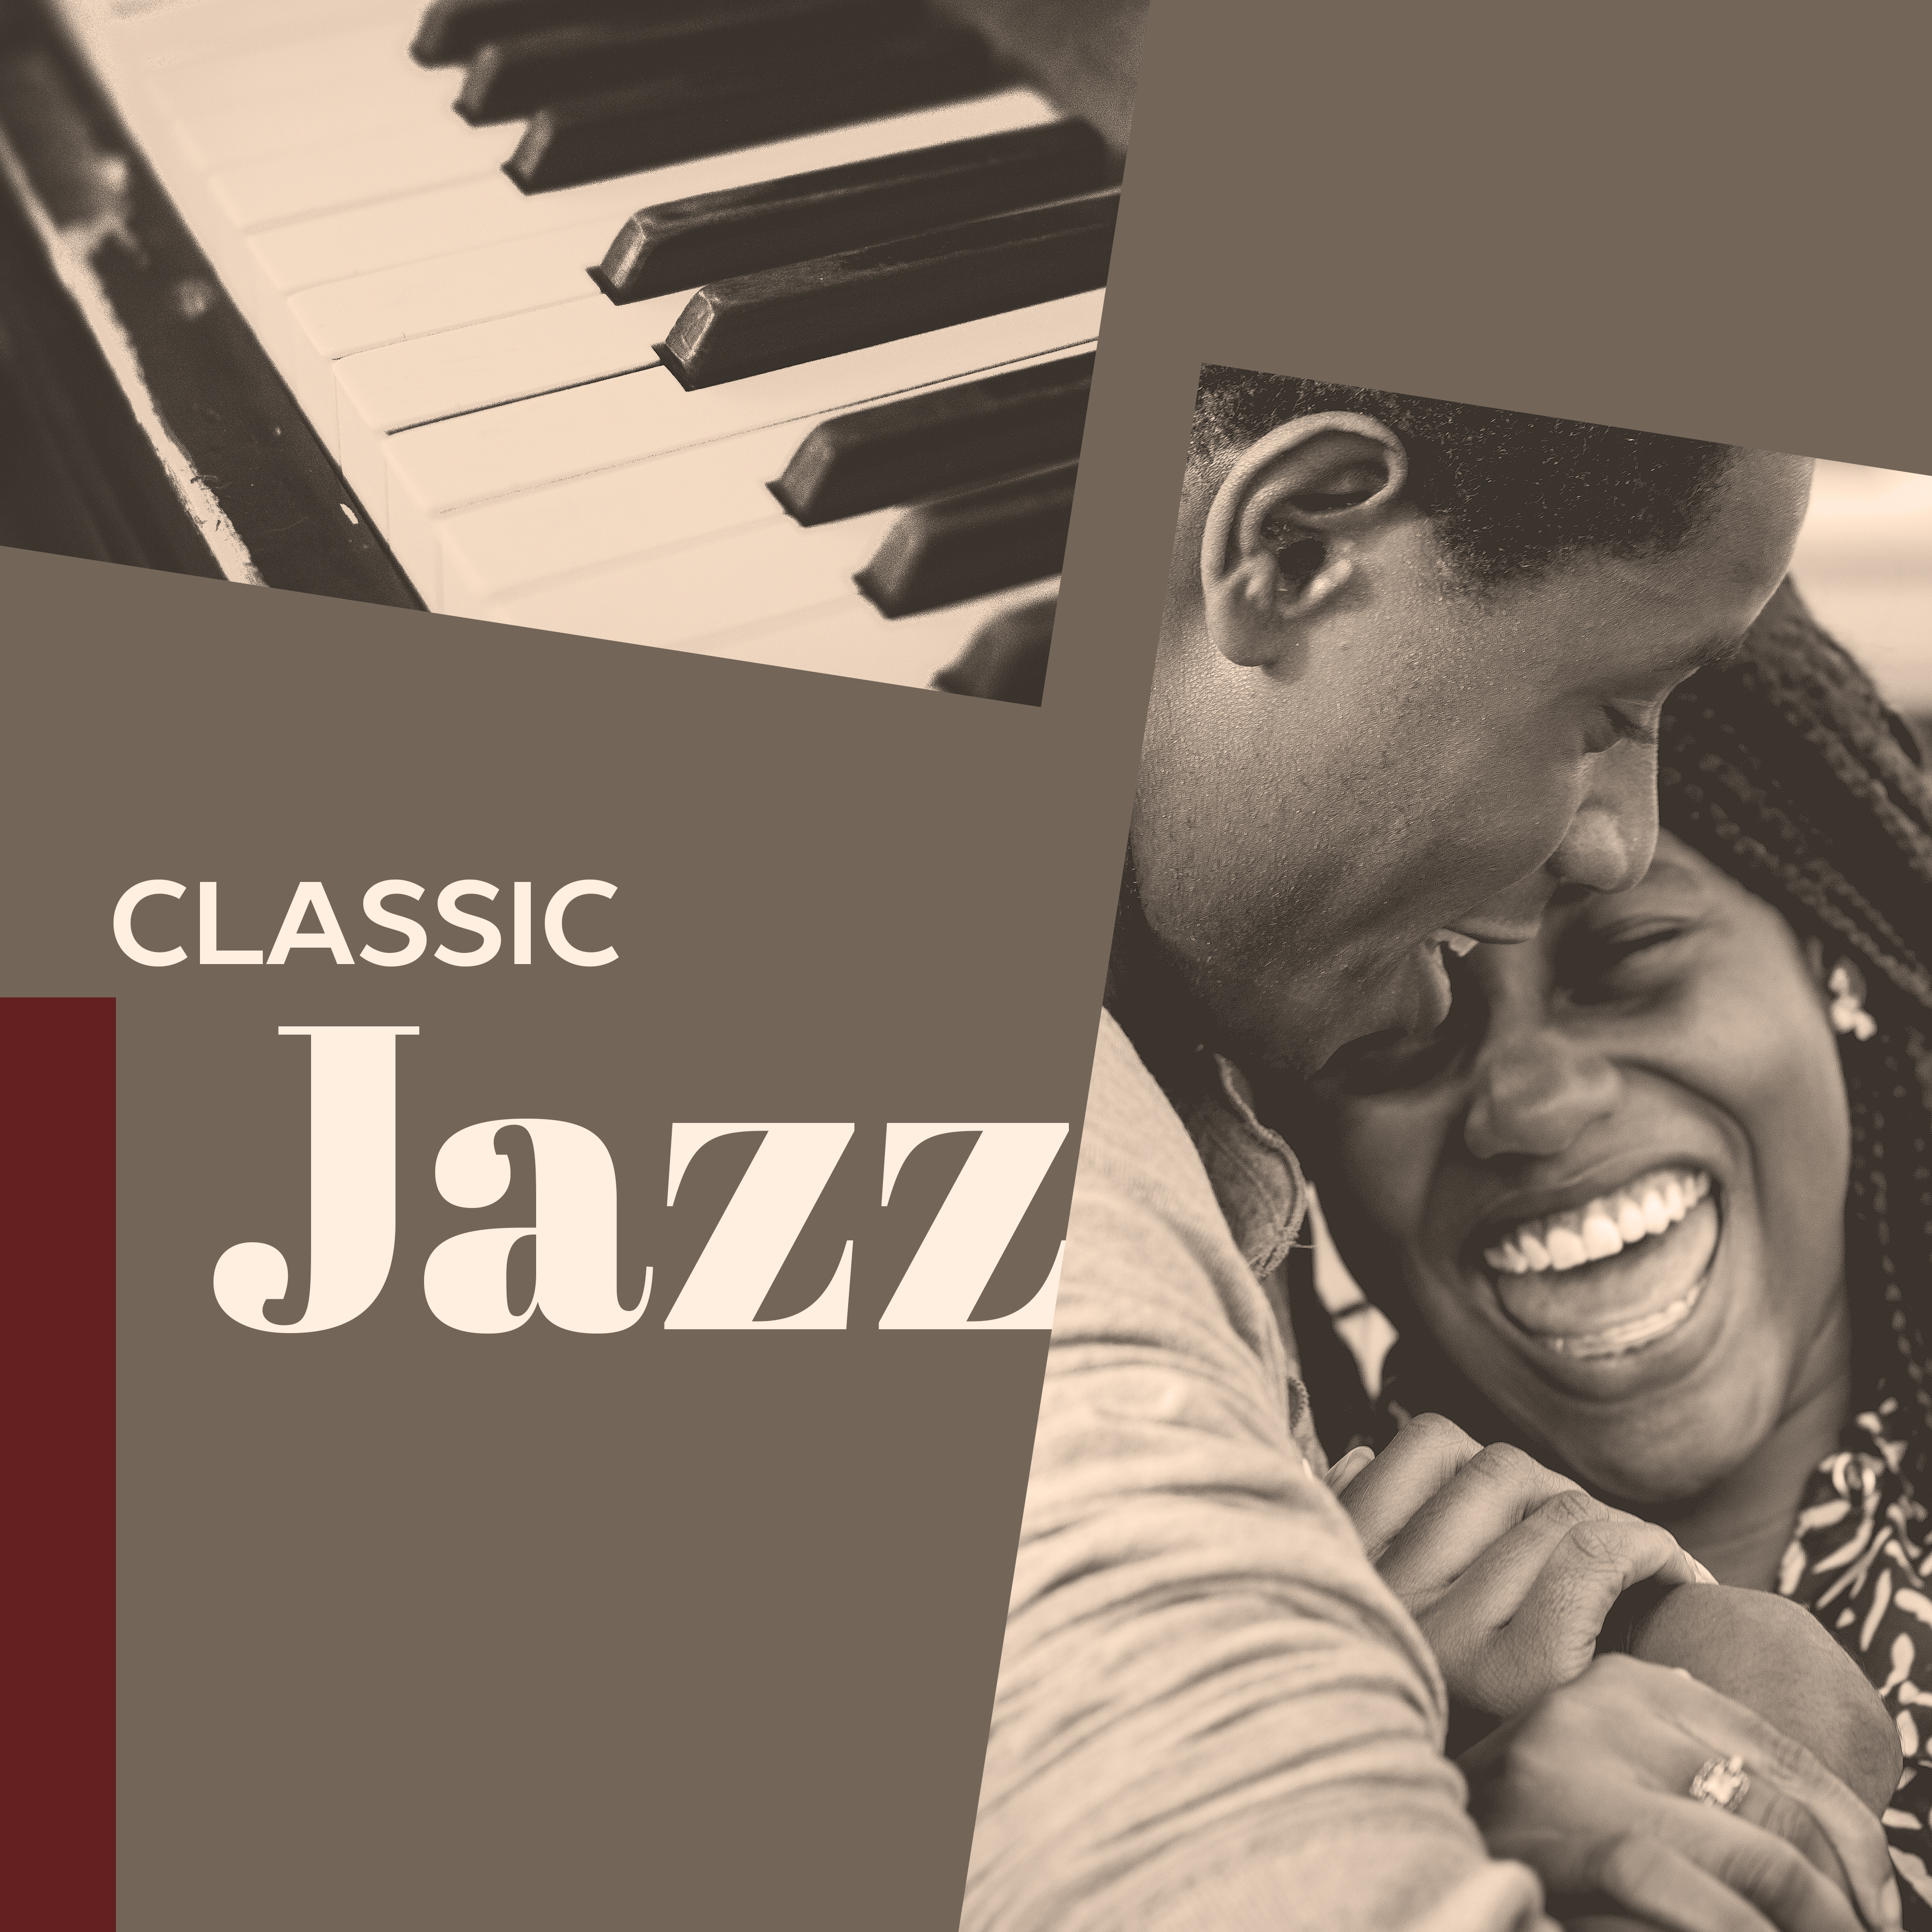 Classic Jazz  Smooth Jazz Cafe, Instrumental Session, Relaxed Jazz